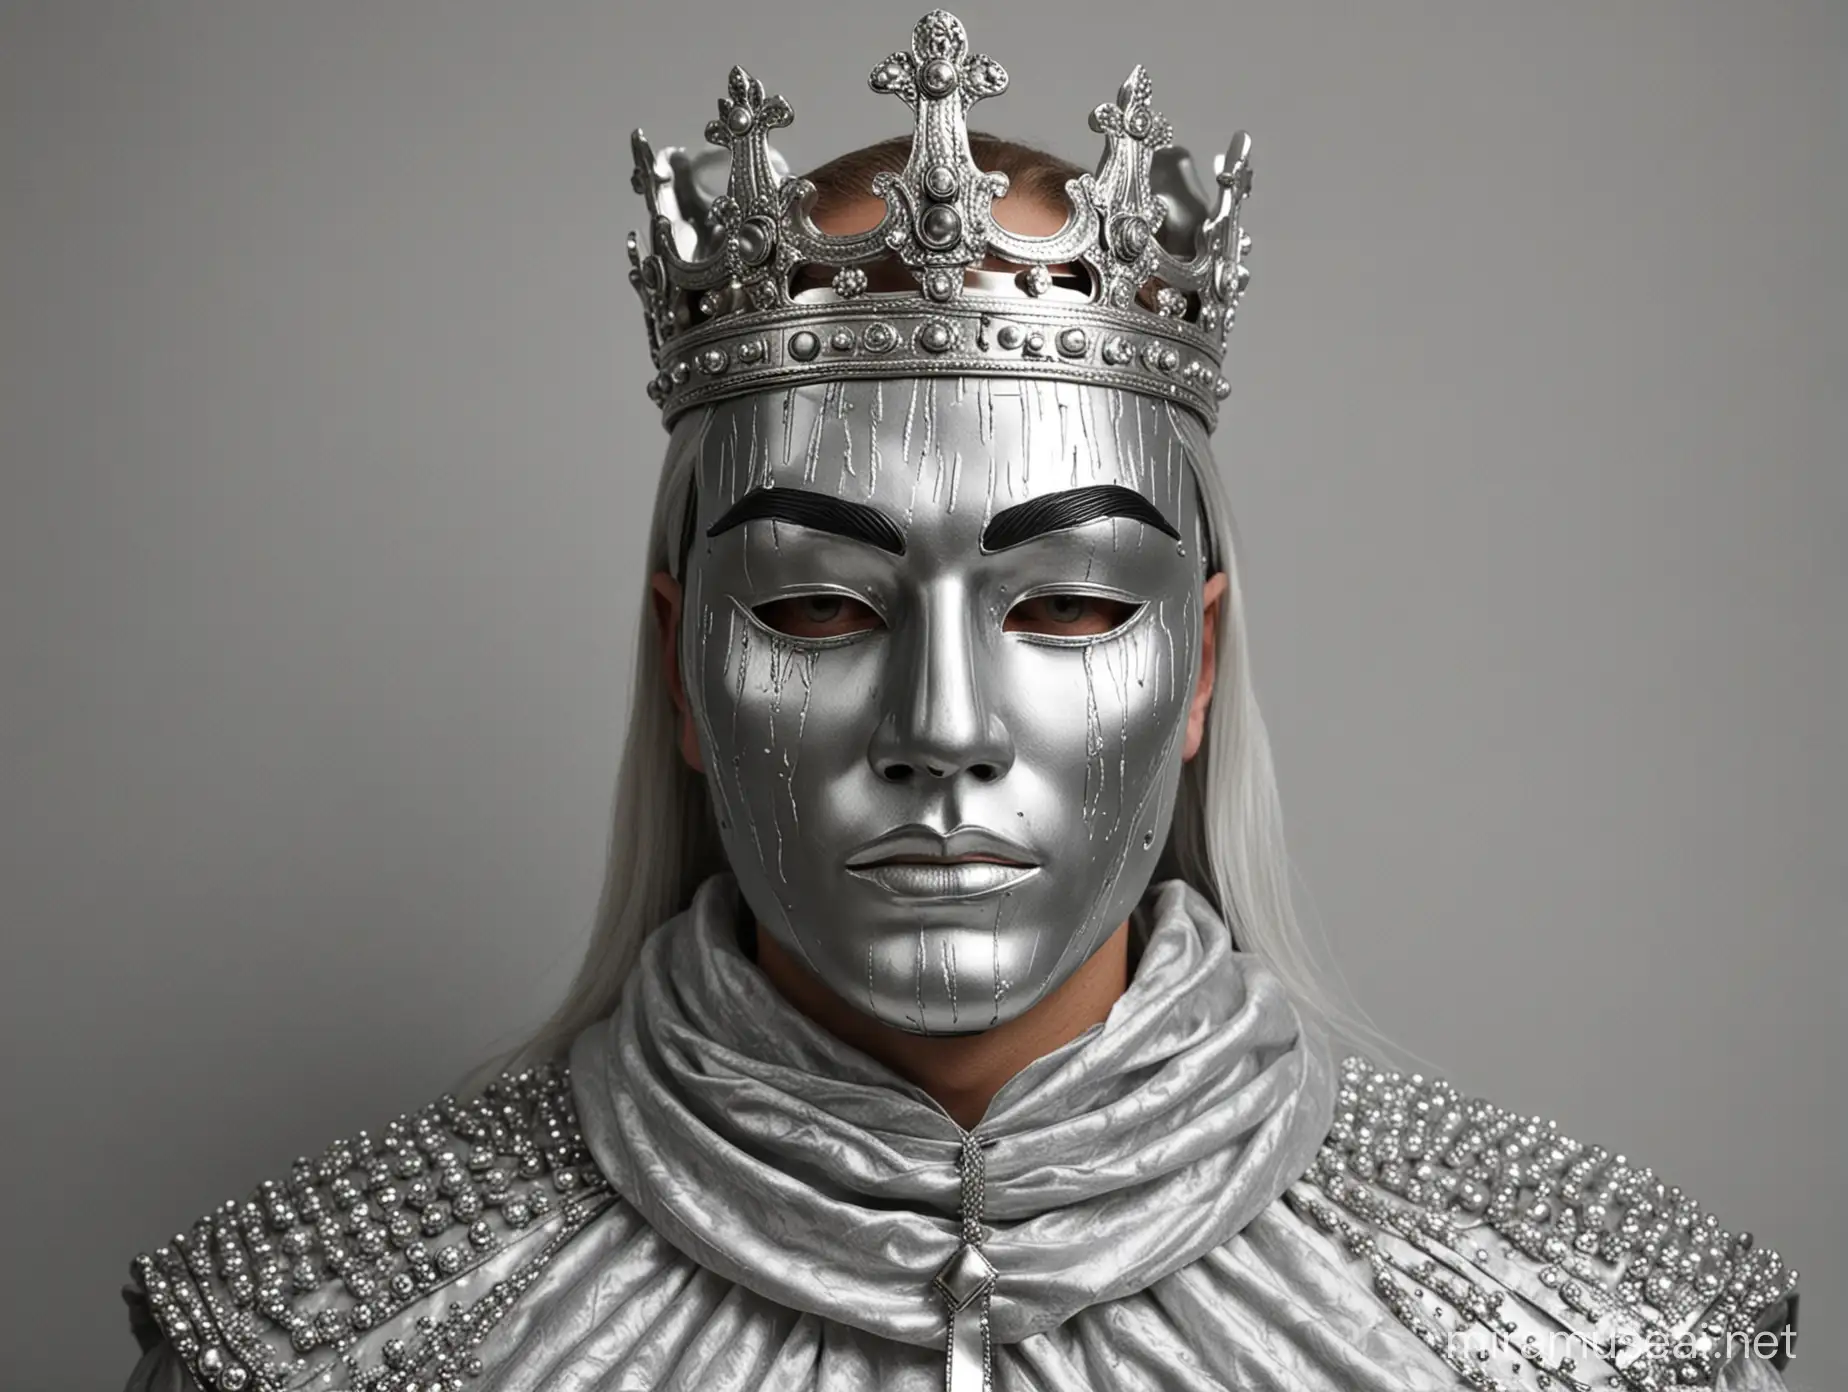 Regal Monarch in a Silver Mask